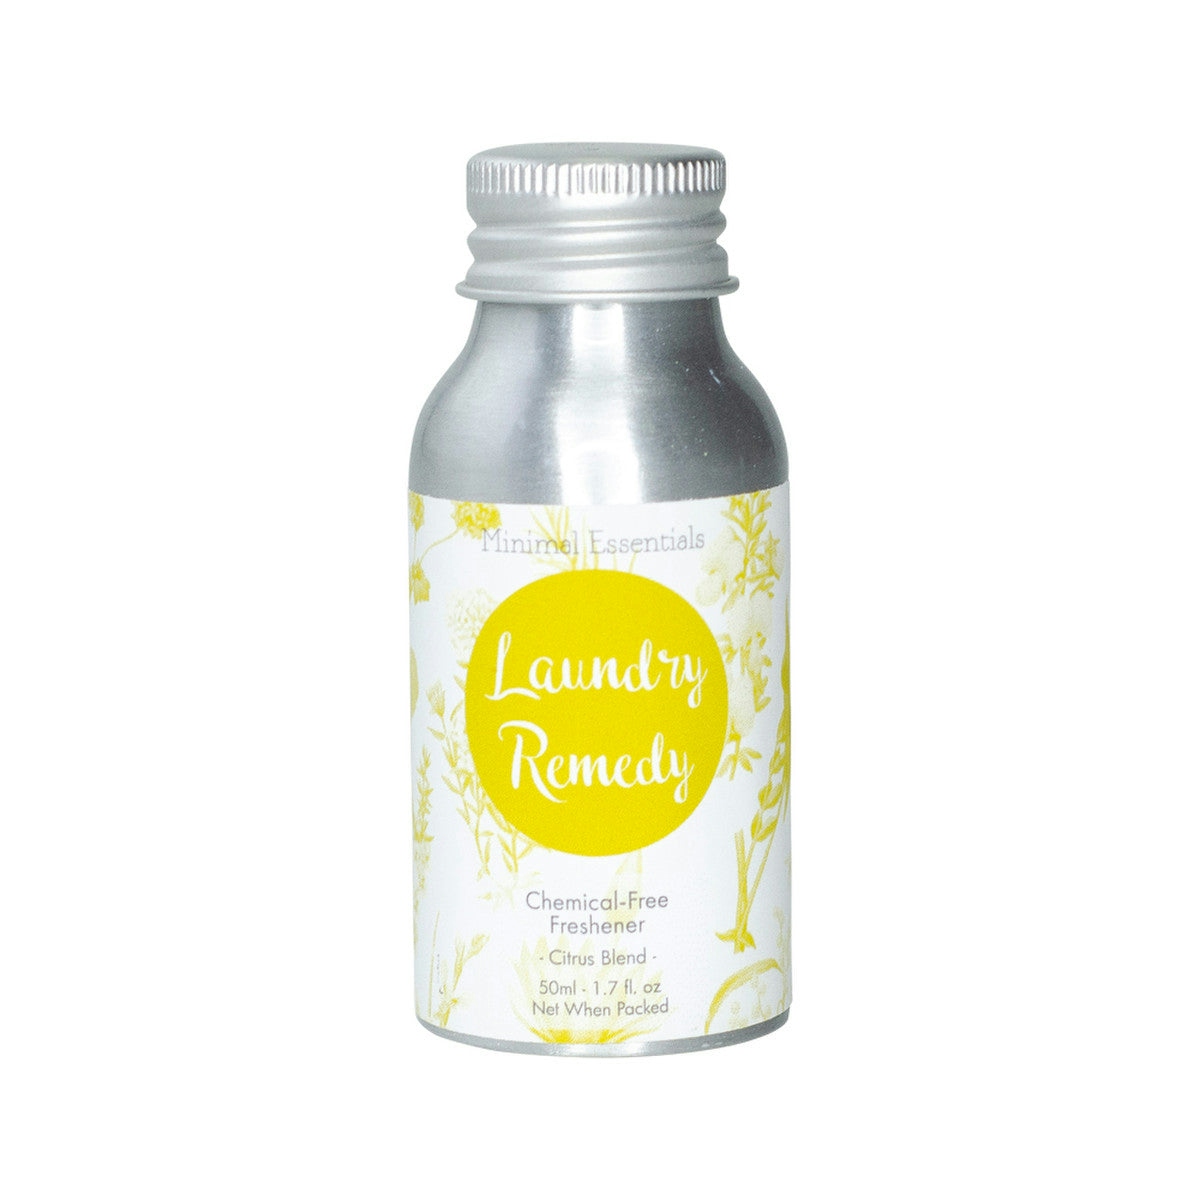 image of Minimal Essentials Laundry Remedy (Chemical-Free Freshener) Citrus Blend 50ml on white background